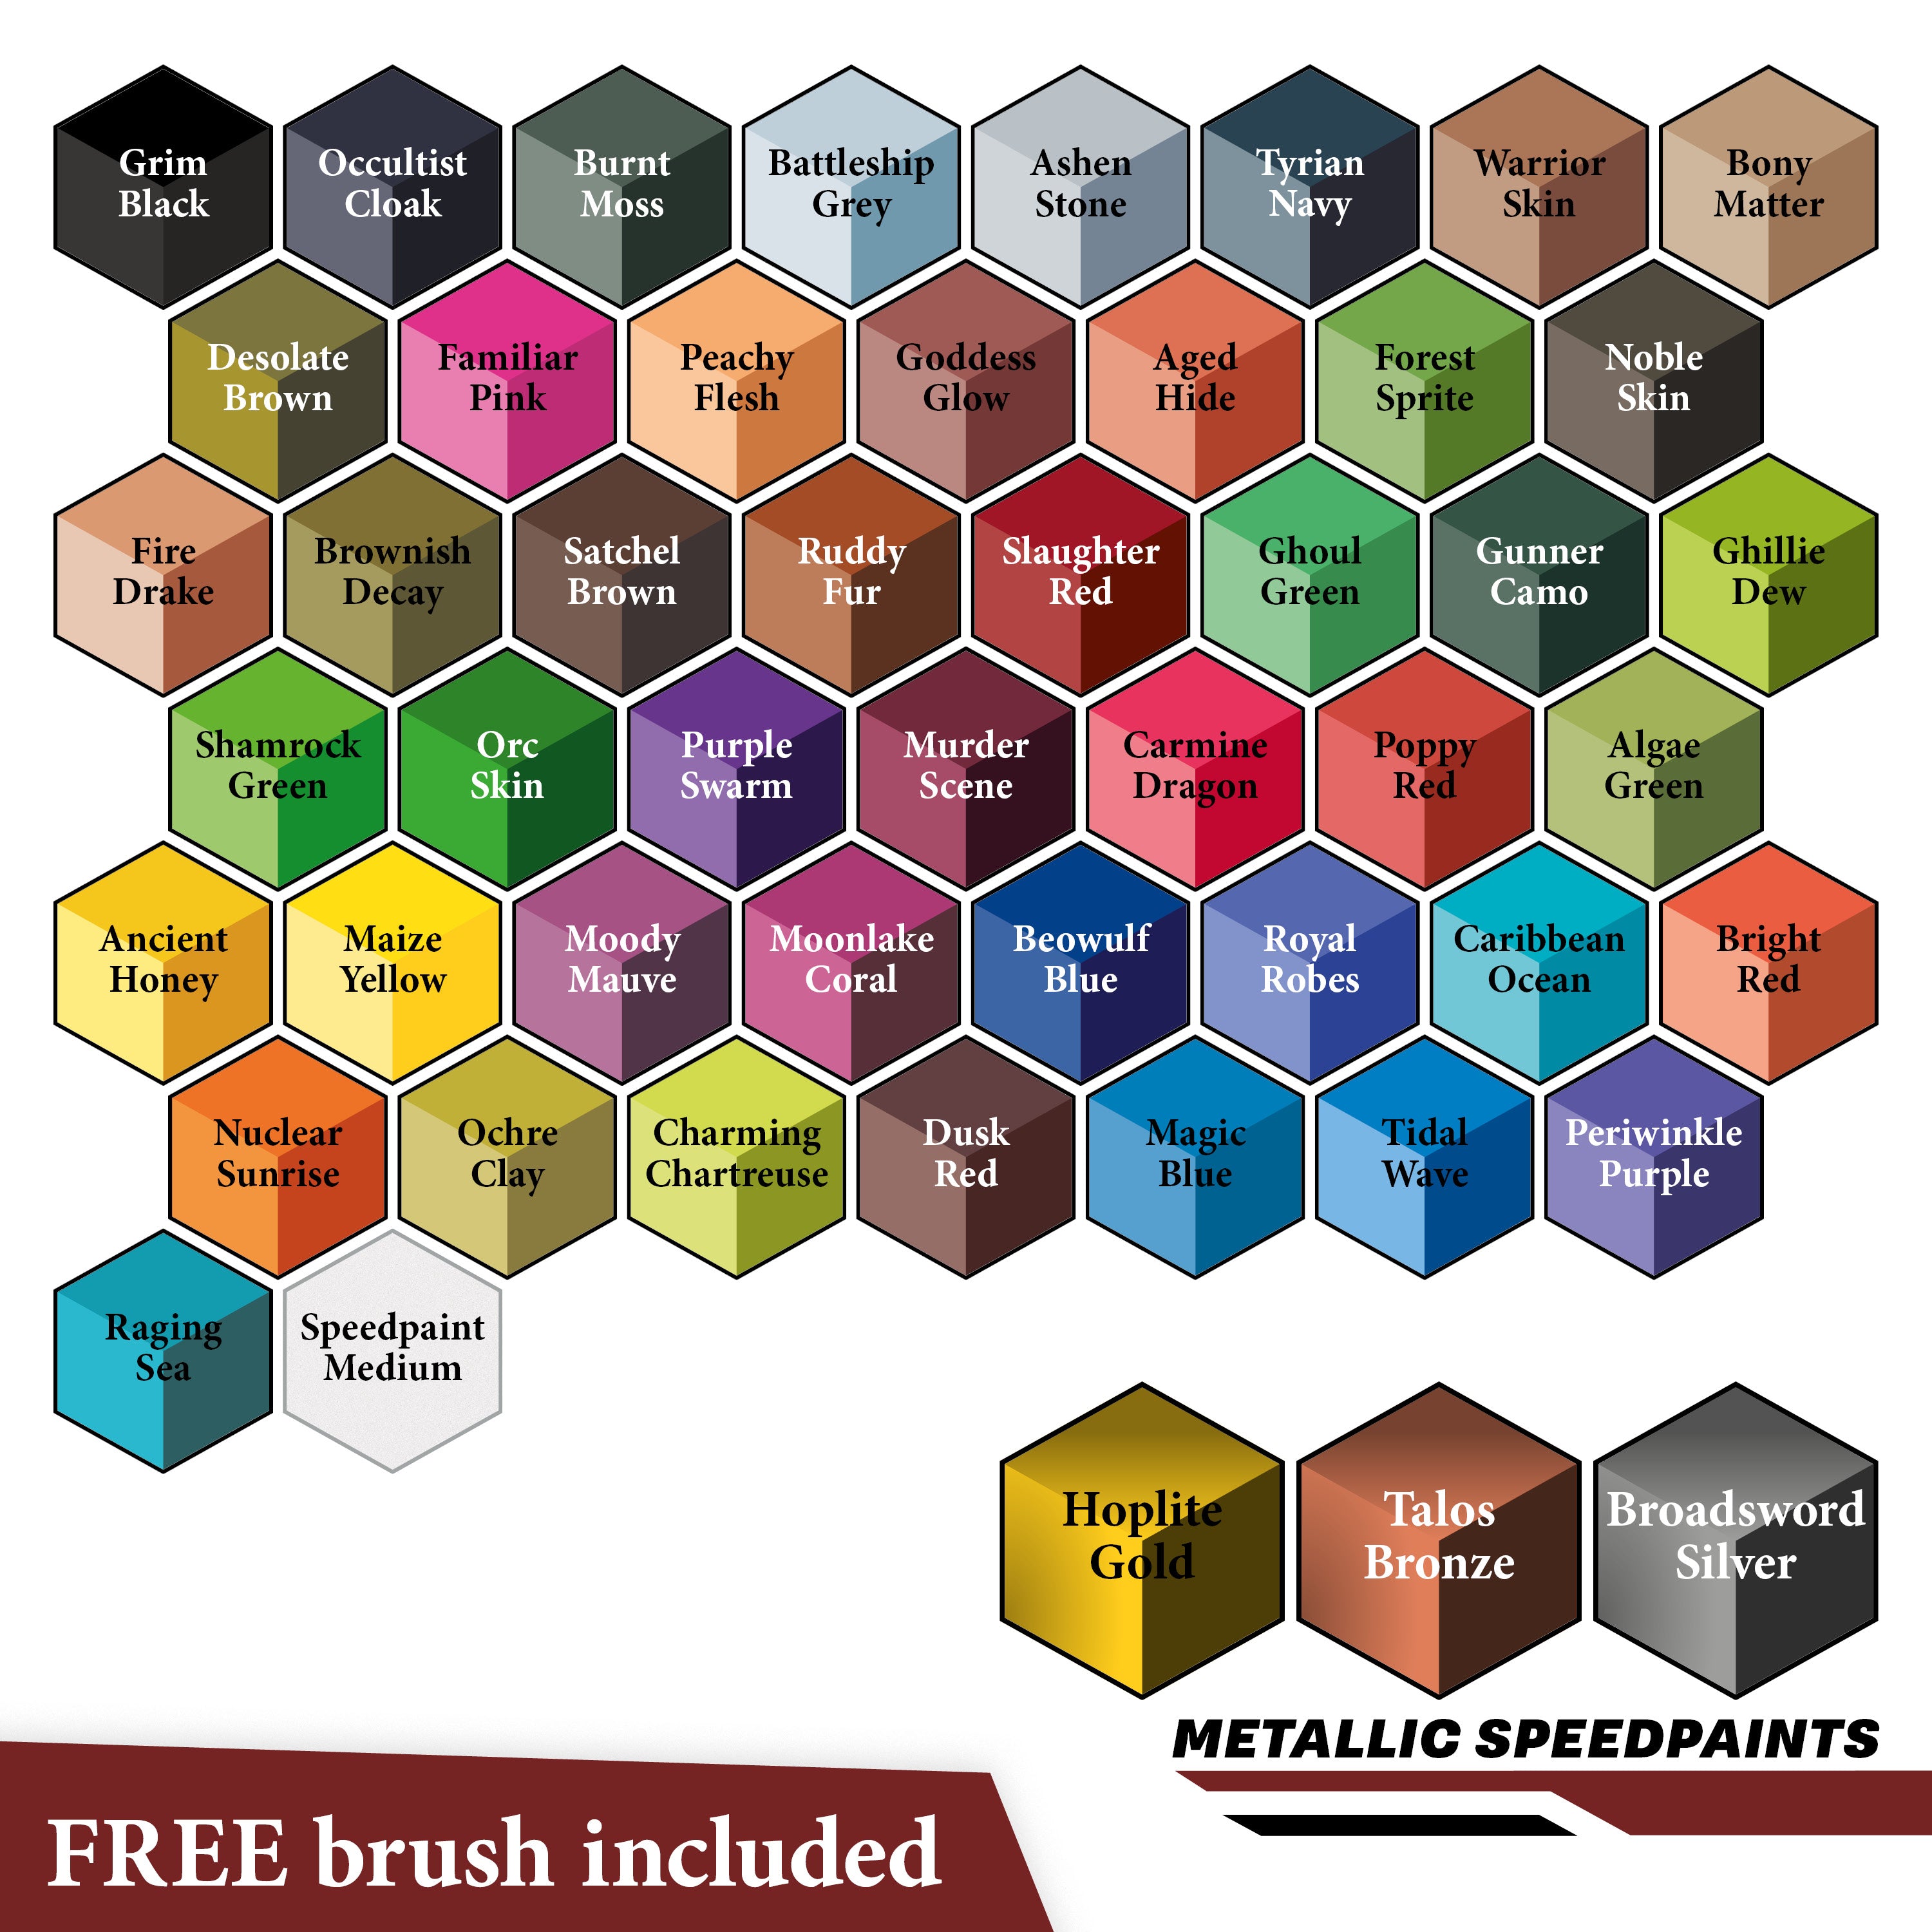 Army Painter Warpaints: Speedpaint Metallics Set 2.0